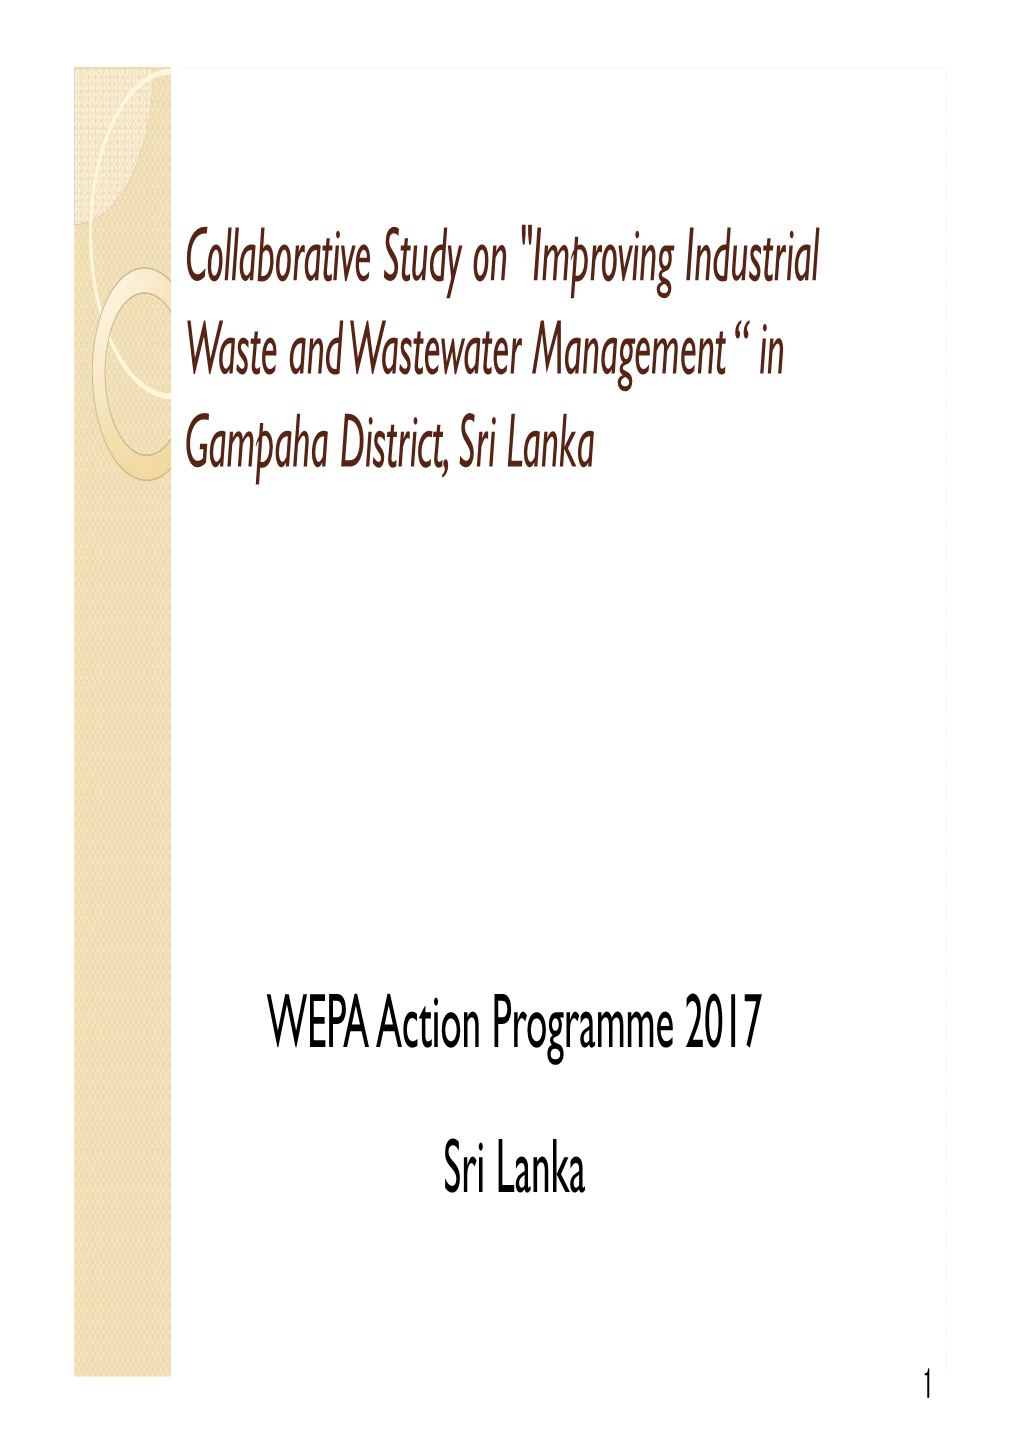 WEPA Action Programme 2017 Sri Lanka